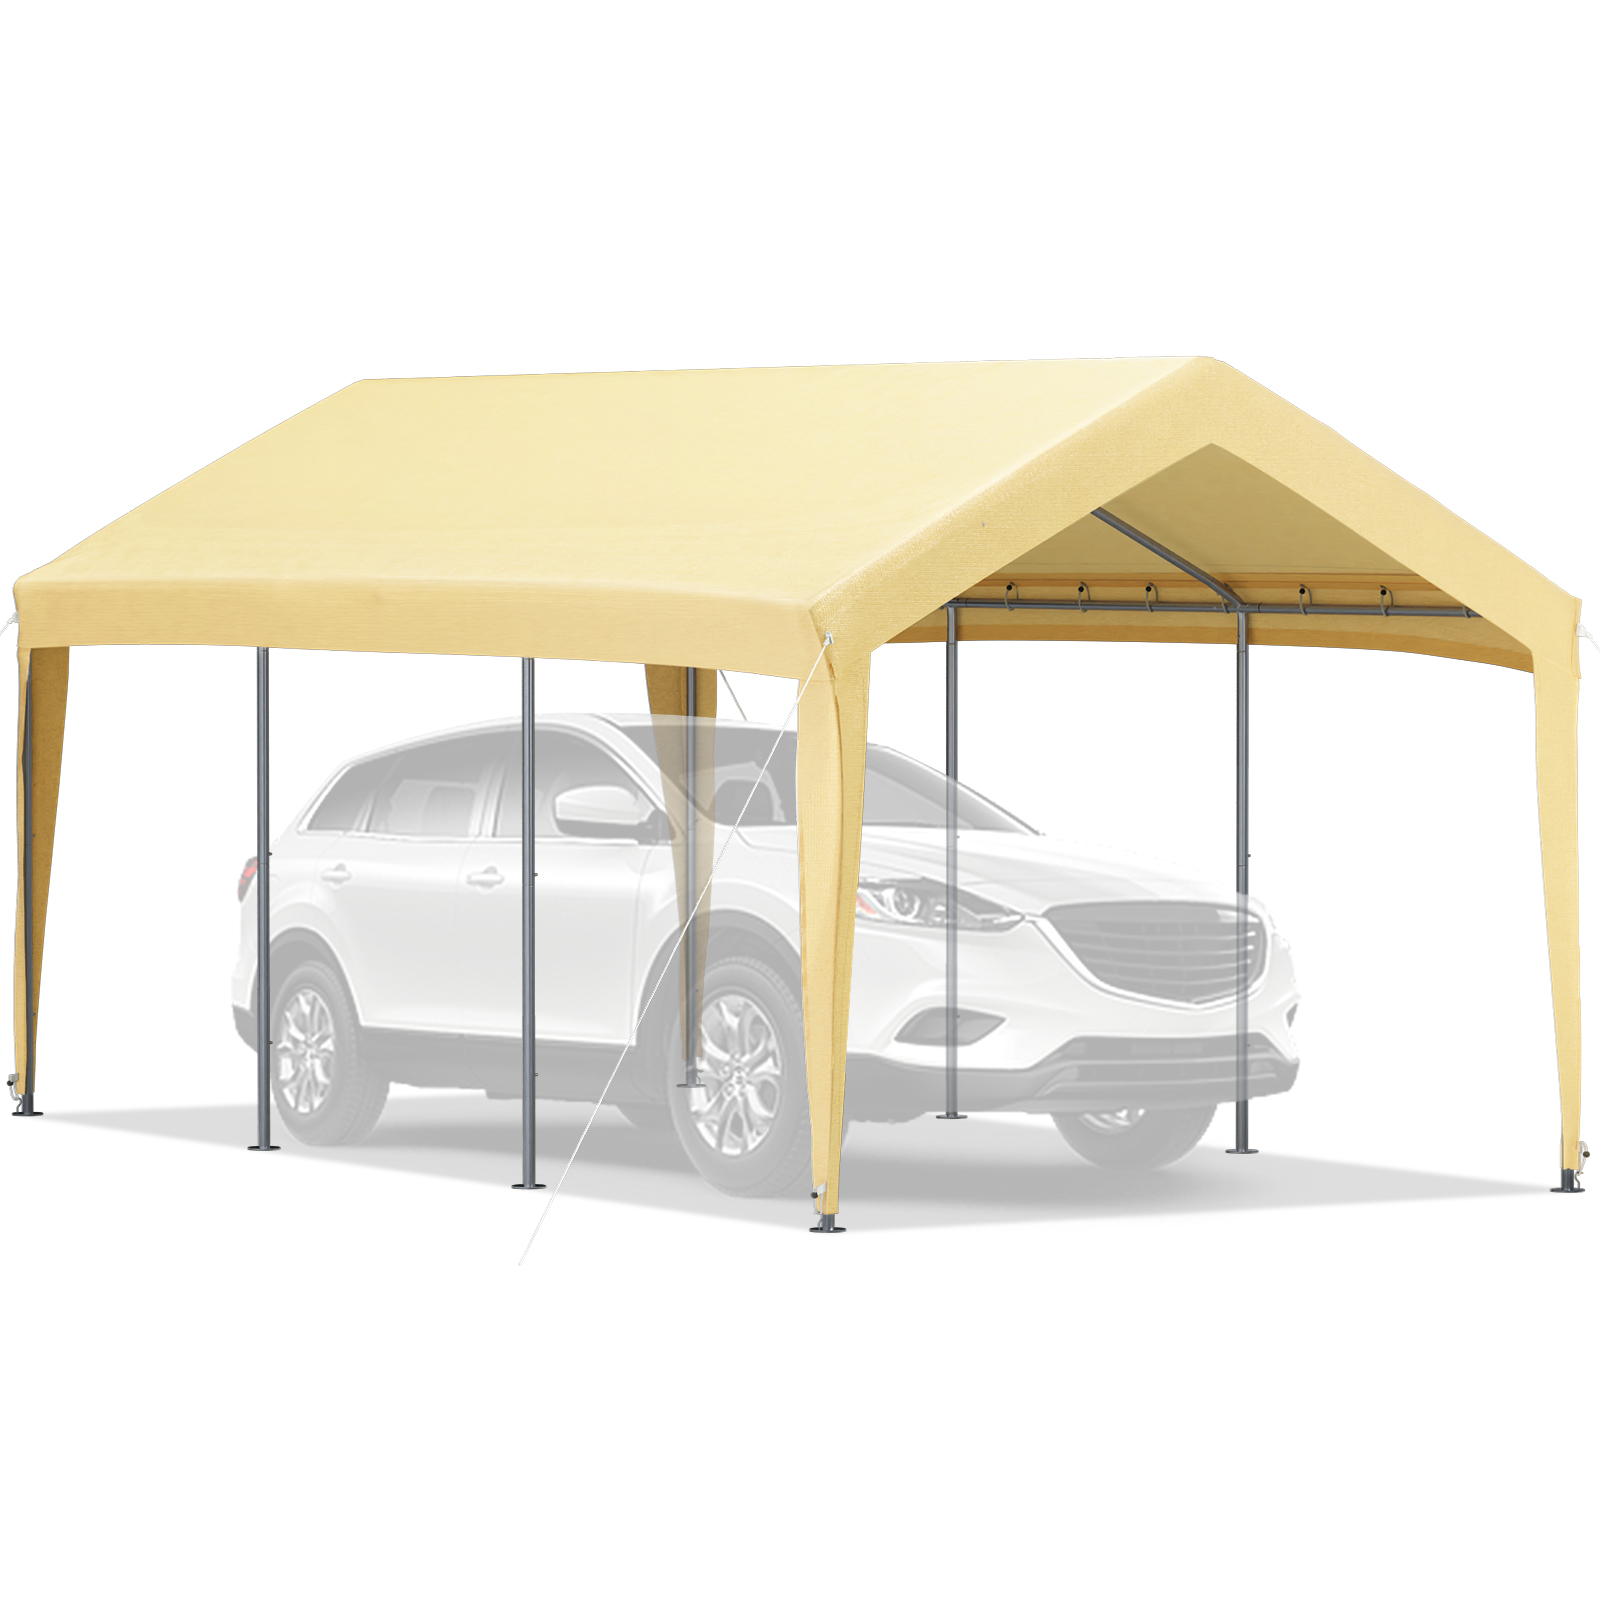 Carport Canopy,10 x 20 ft,Sidewalls & Windows